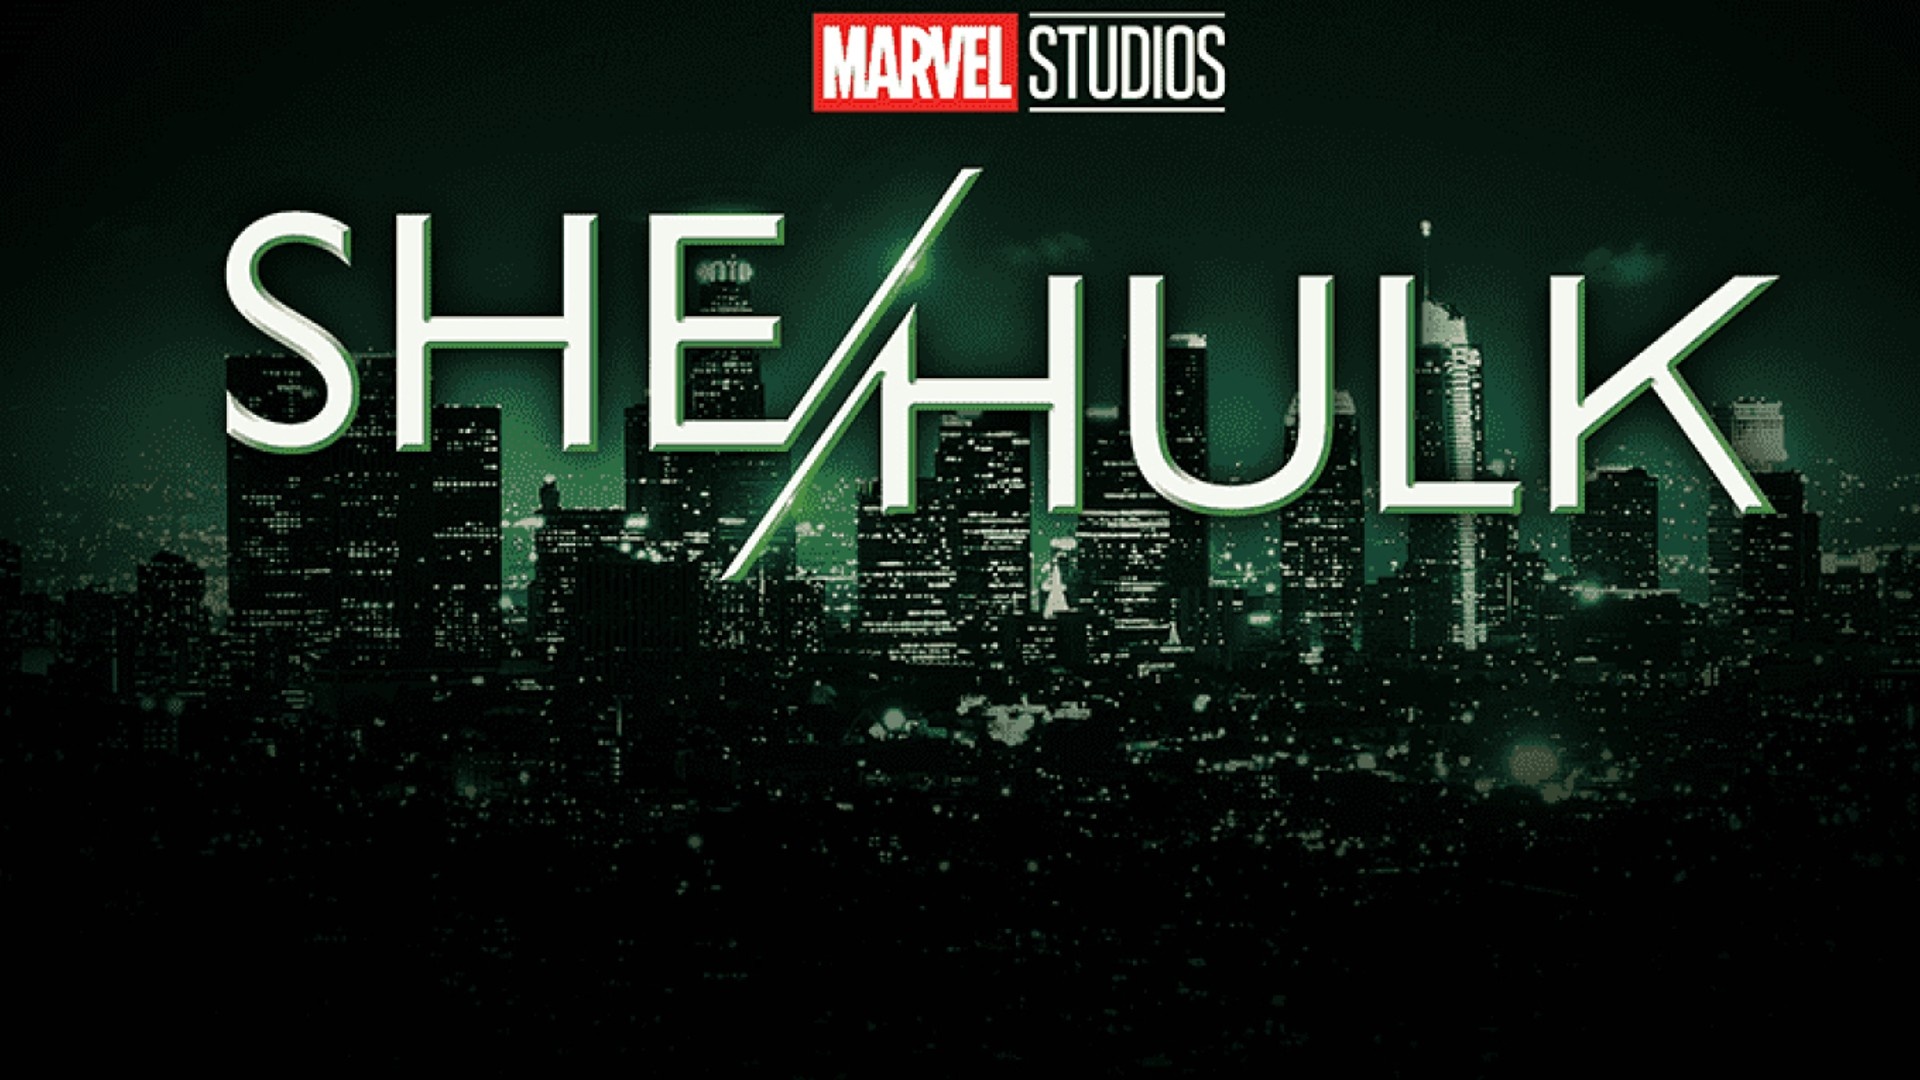 She-Hulk: Attorney at Law (TV Series 2022): Comic book, Bruce Banner, Female version of Hulk, 2022, Series trailer release, CGI Effects. 1920x1080 Full HD Wallpaper.